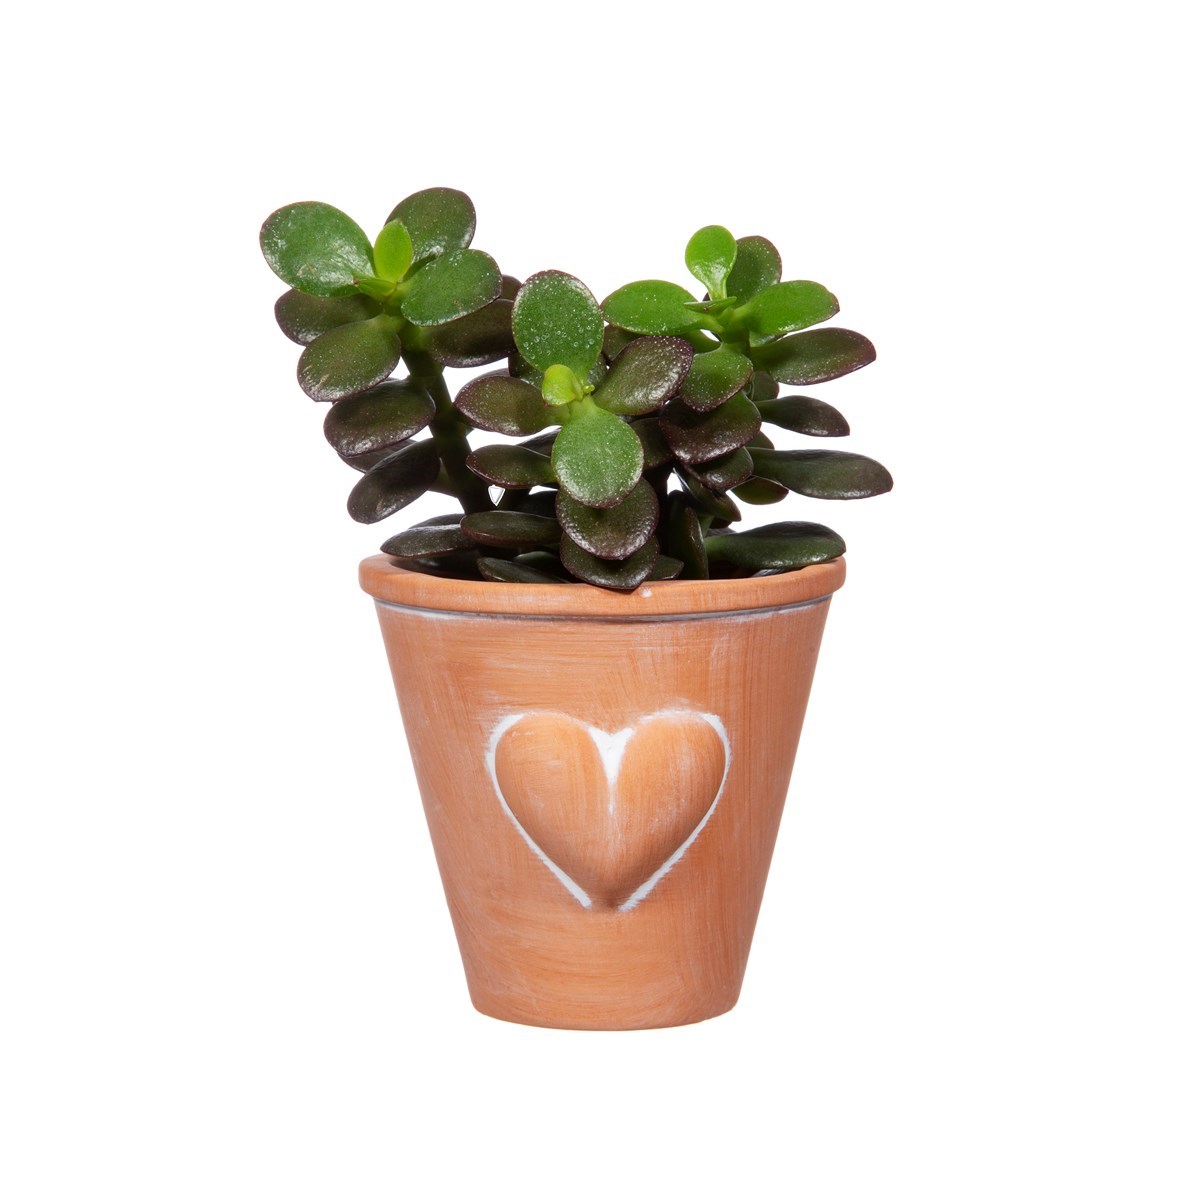 Mini Terracotta Pot With Heart